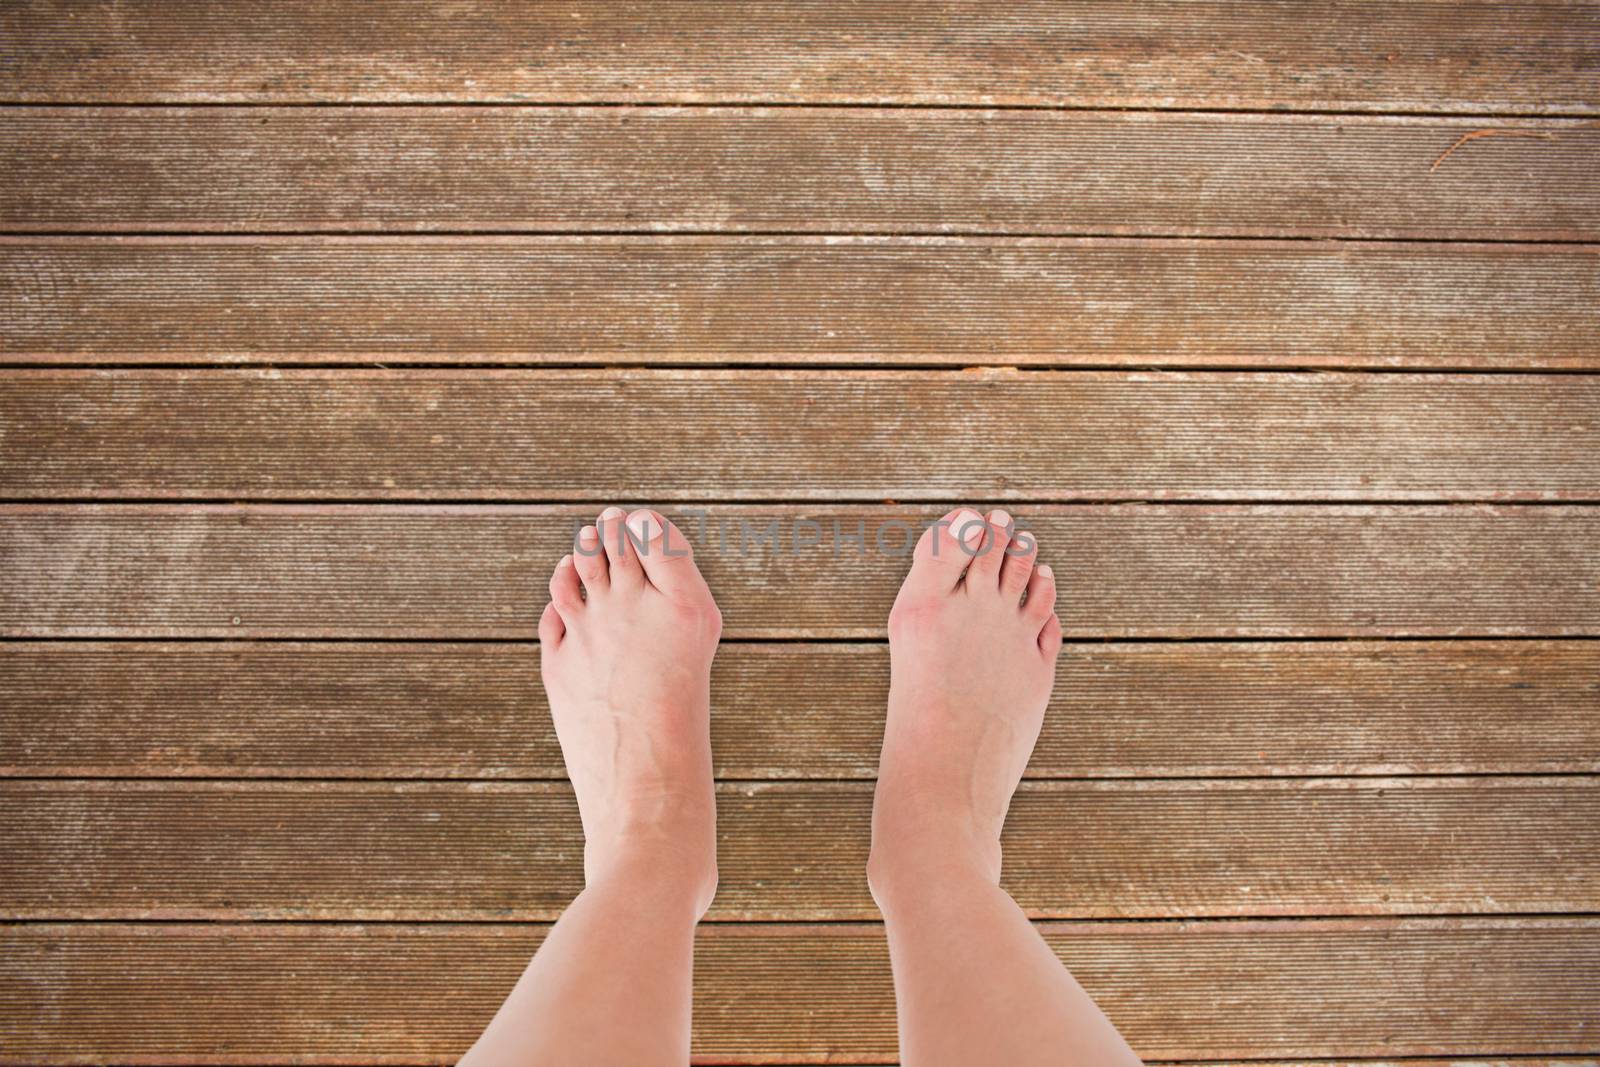 Feet against wooden planks background